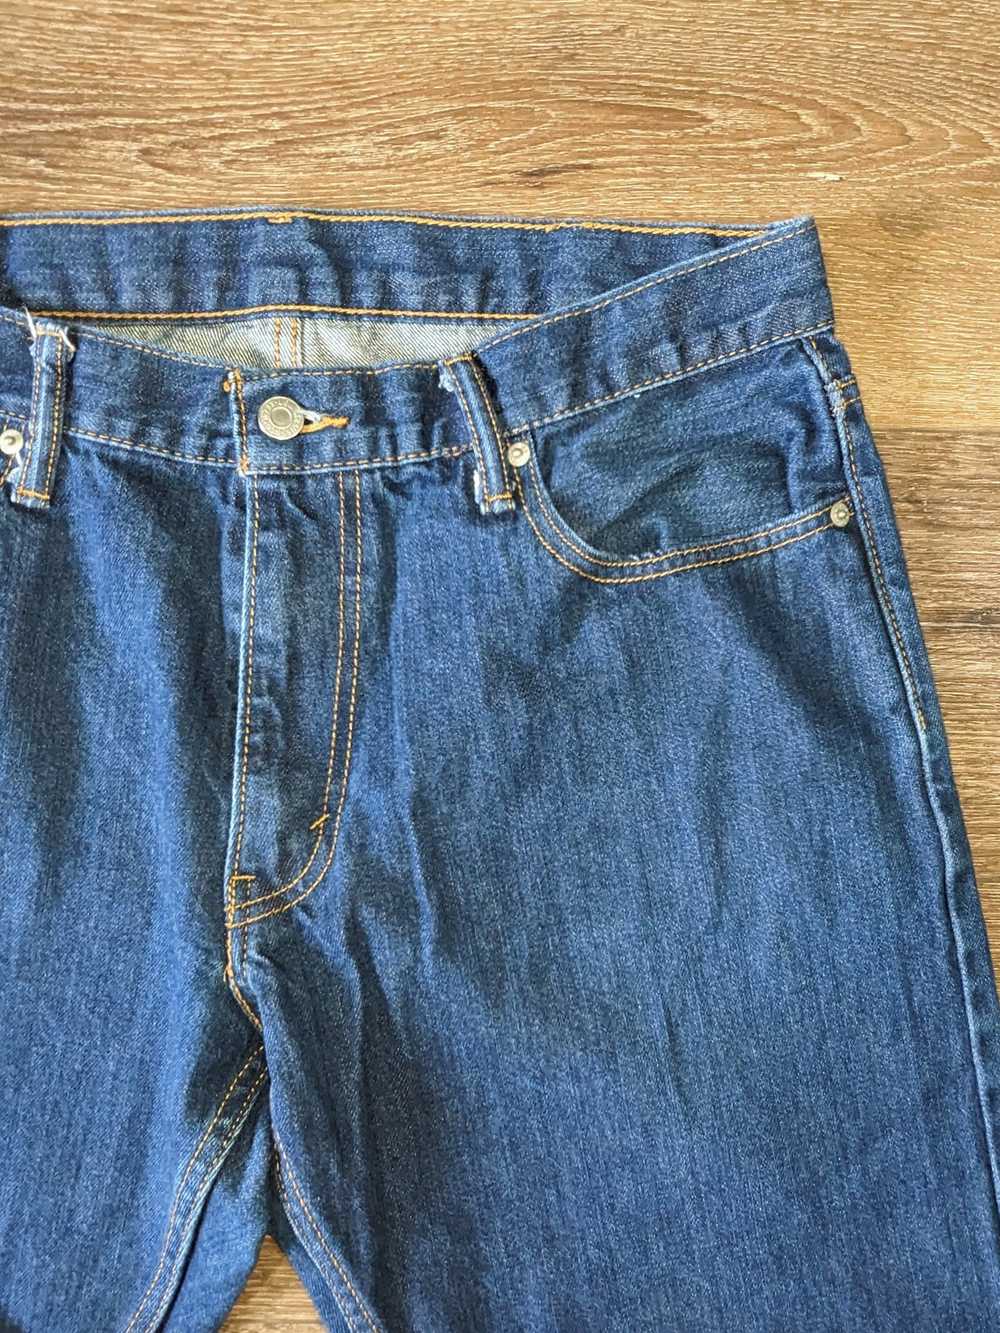 Levi's Levi's 514 straight fit jeans - SIZE 36 x … - image 2